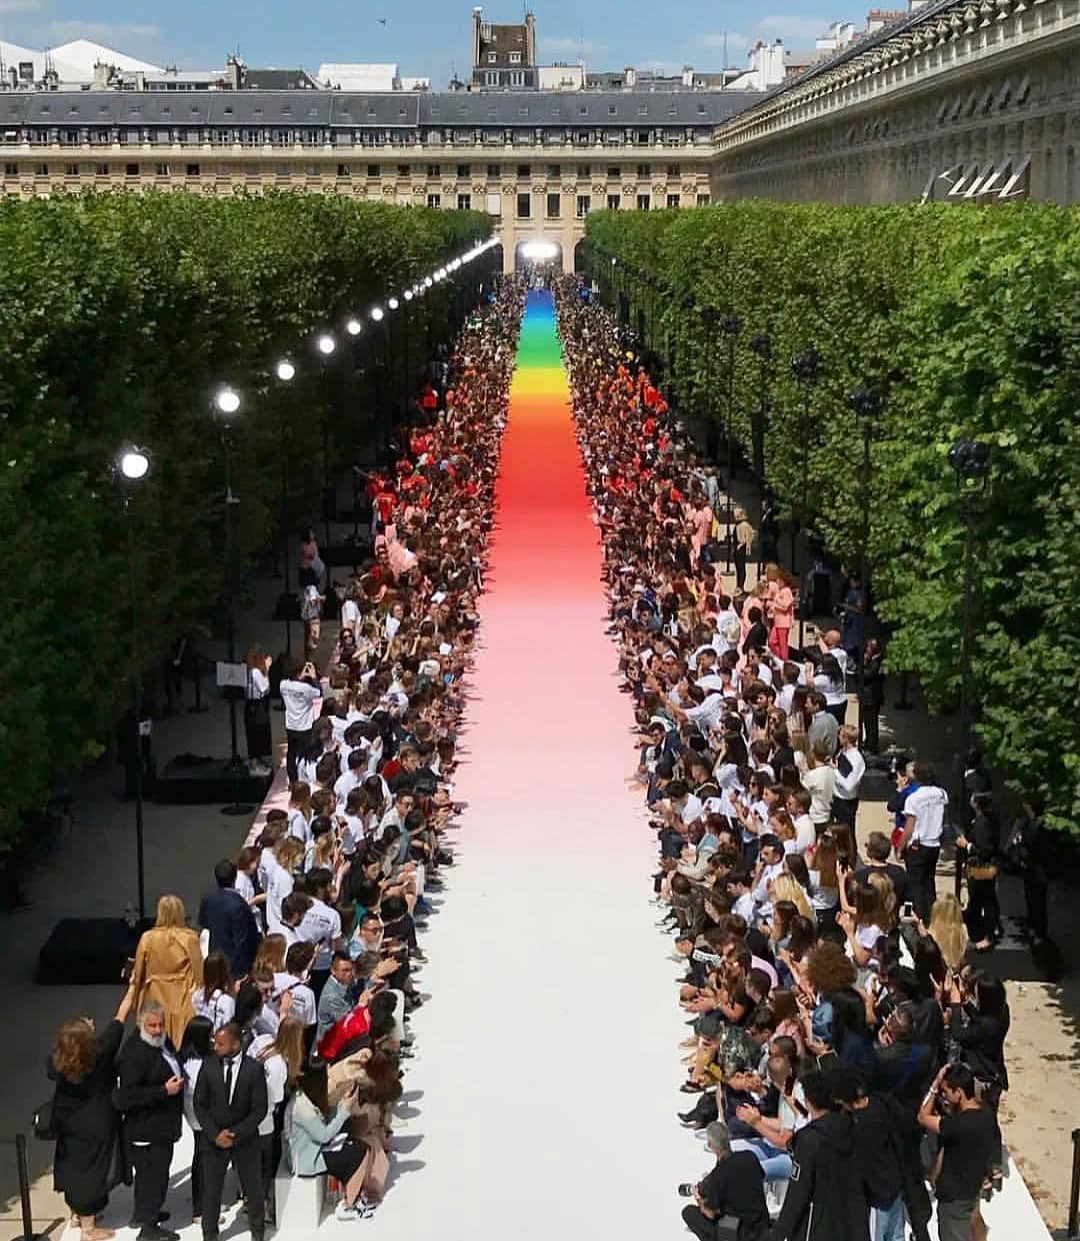 Virgil Abloh: Louis Vuitton ss19 collezione arcobaleno, foto e video - VelvetStyle